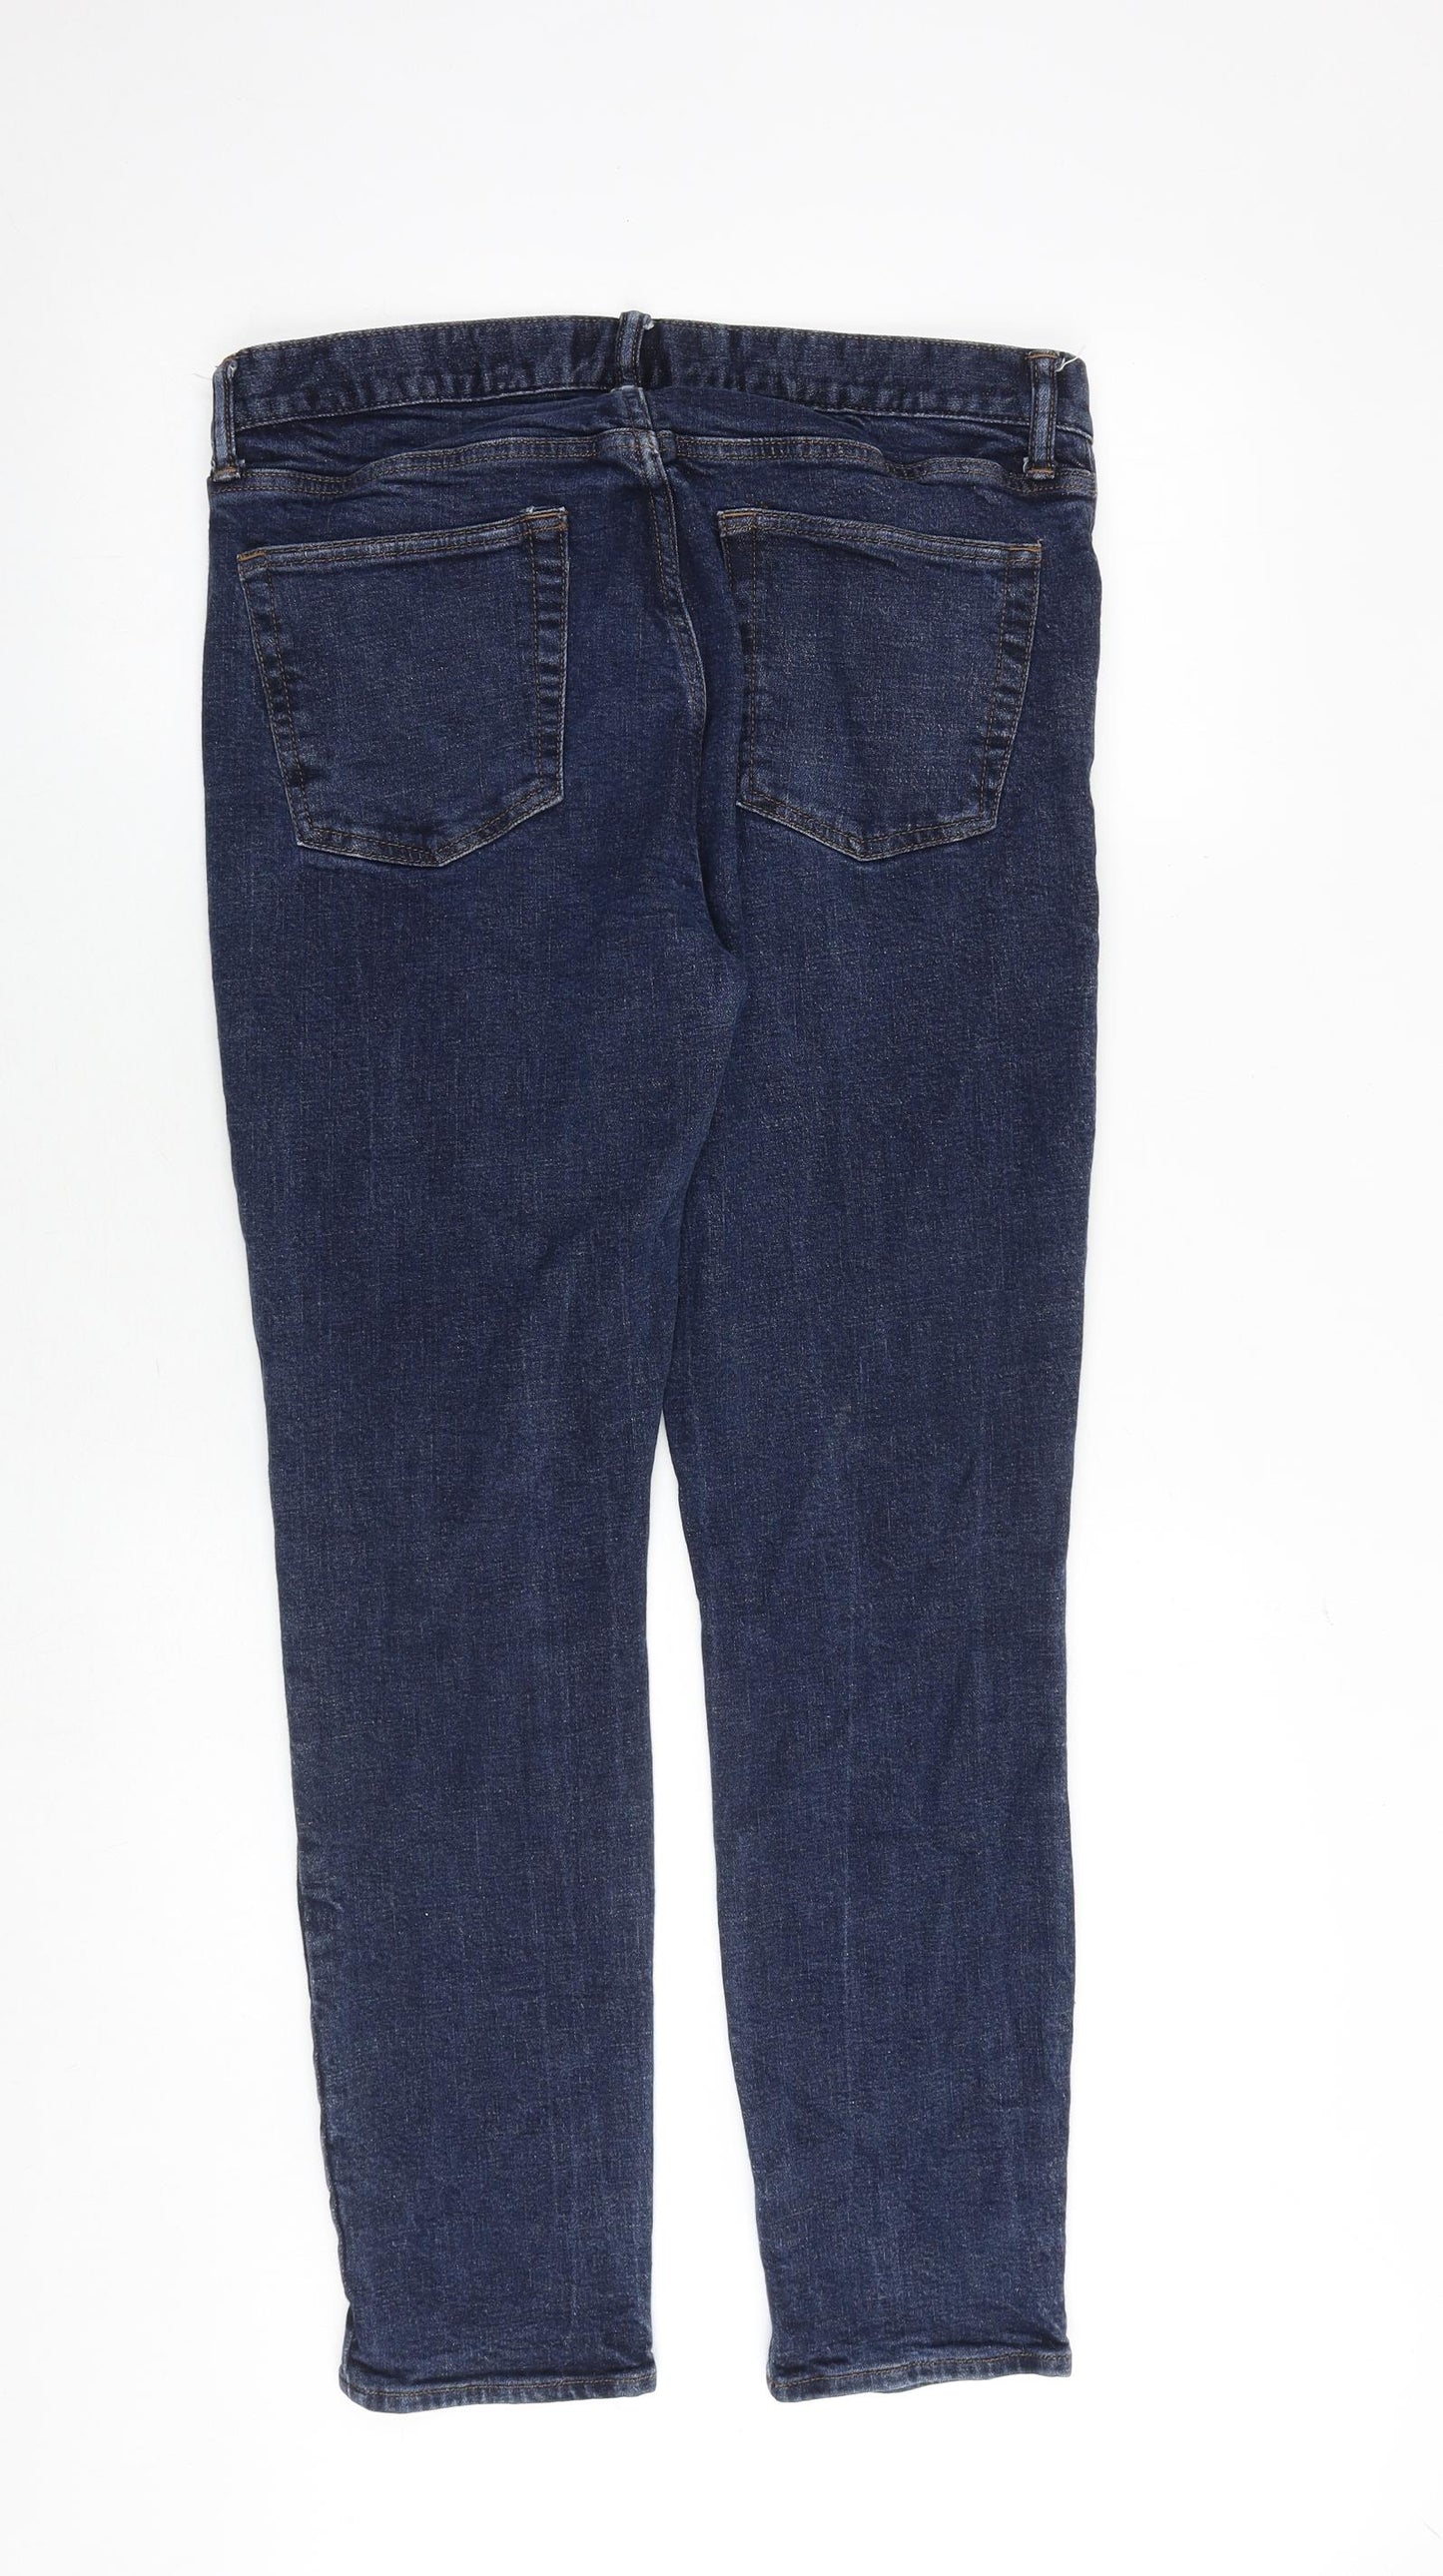 Gap Mens Blue Cotton Skinny Jeans Size 34 in L32 in Regular Zip